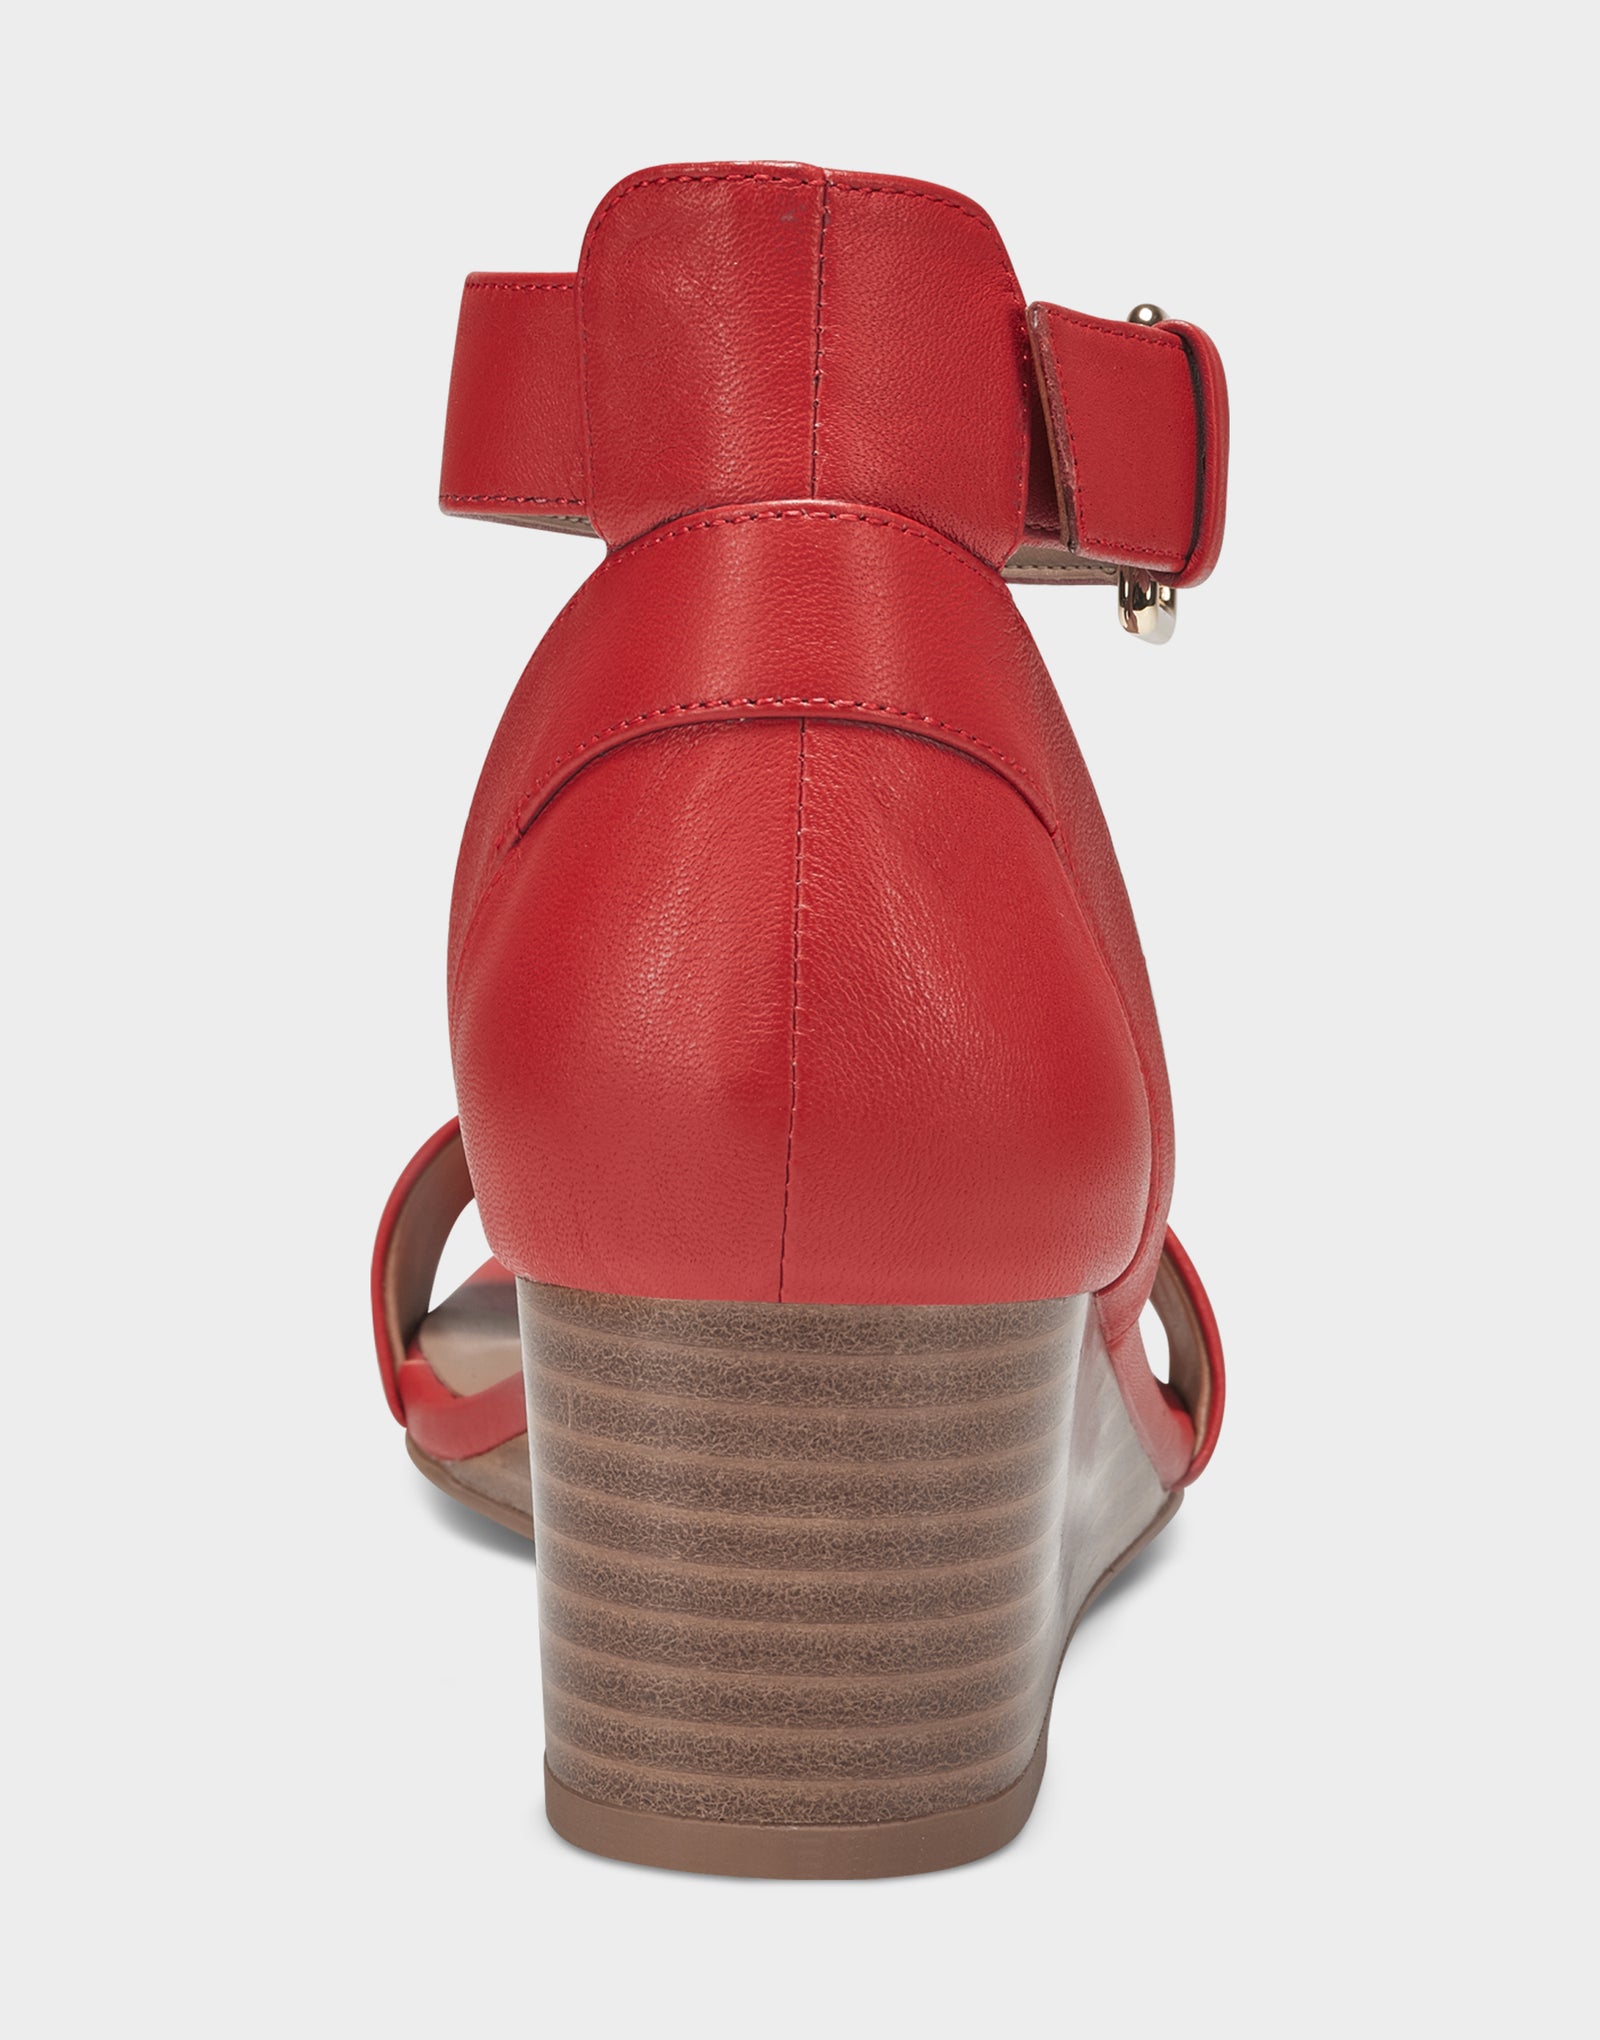 Women's Wedge Sandal in Red